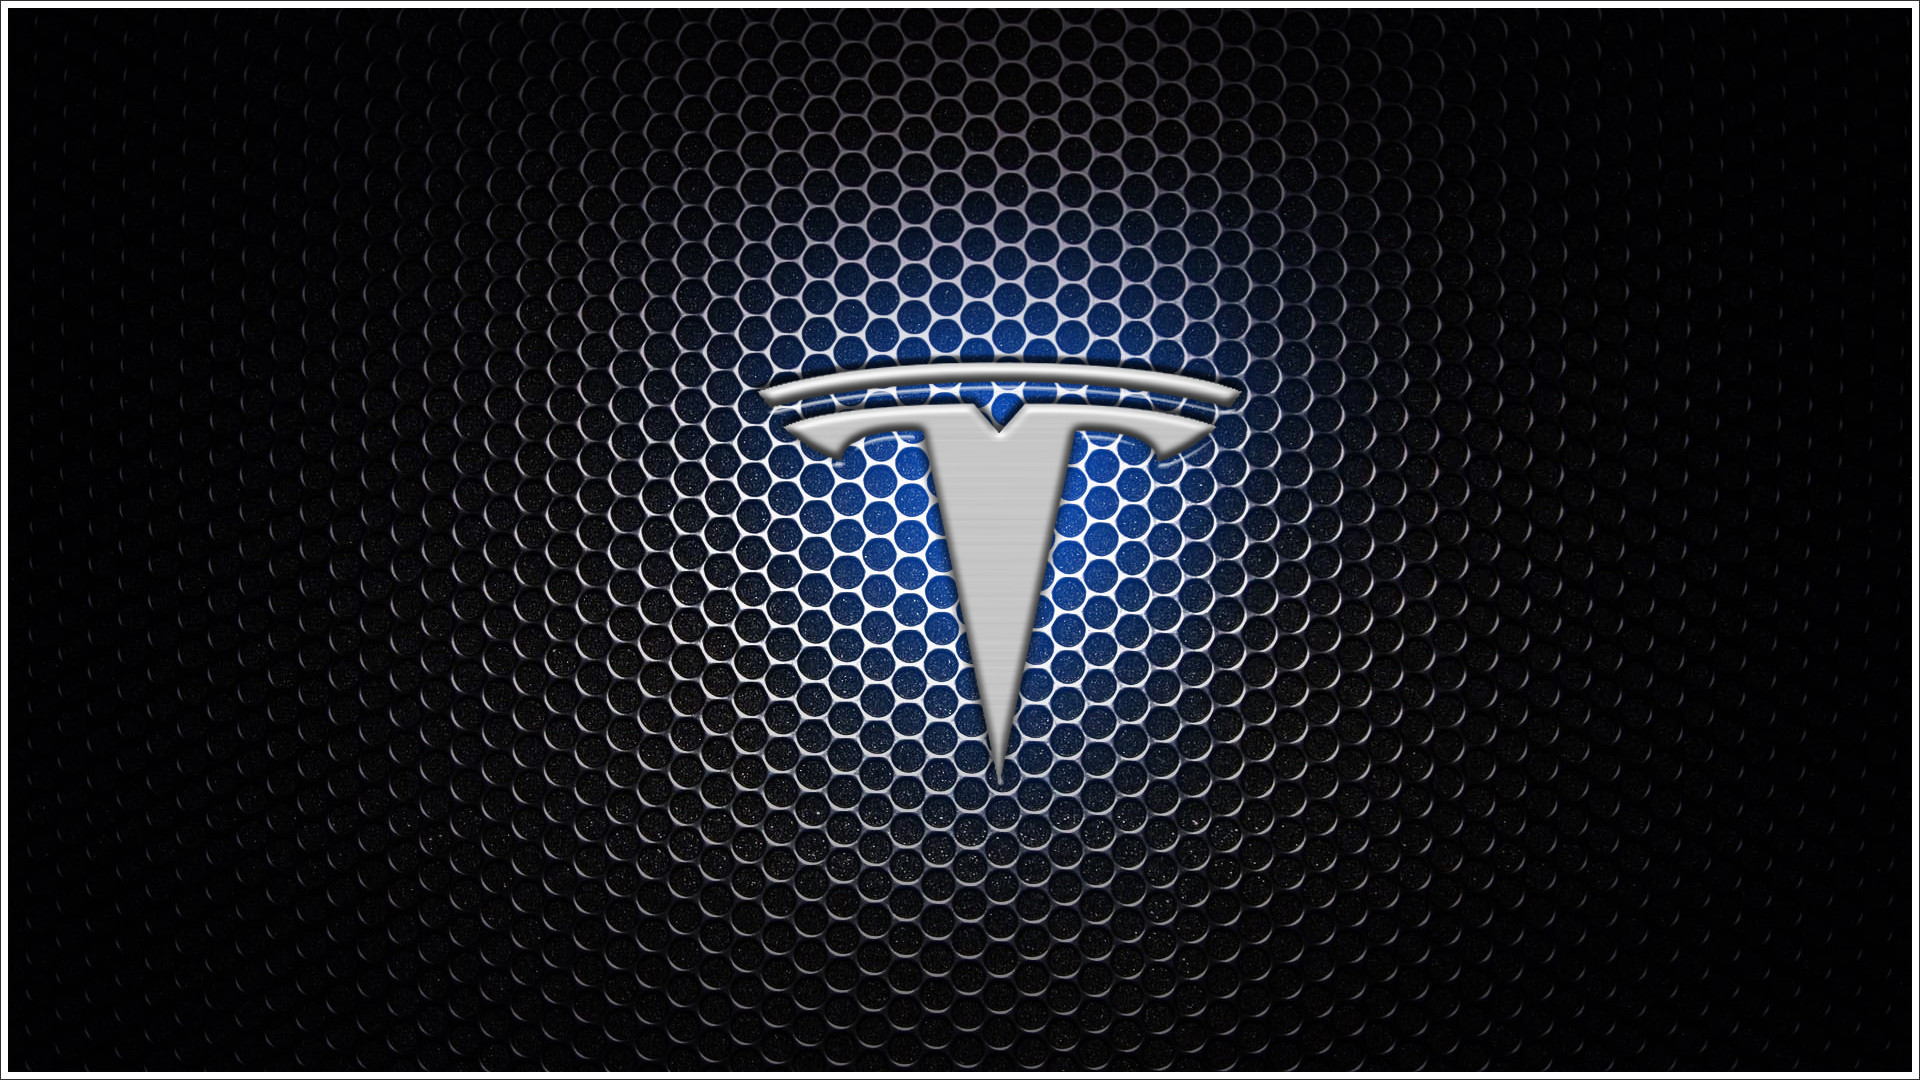 1920x1080 Tesla logos